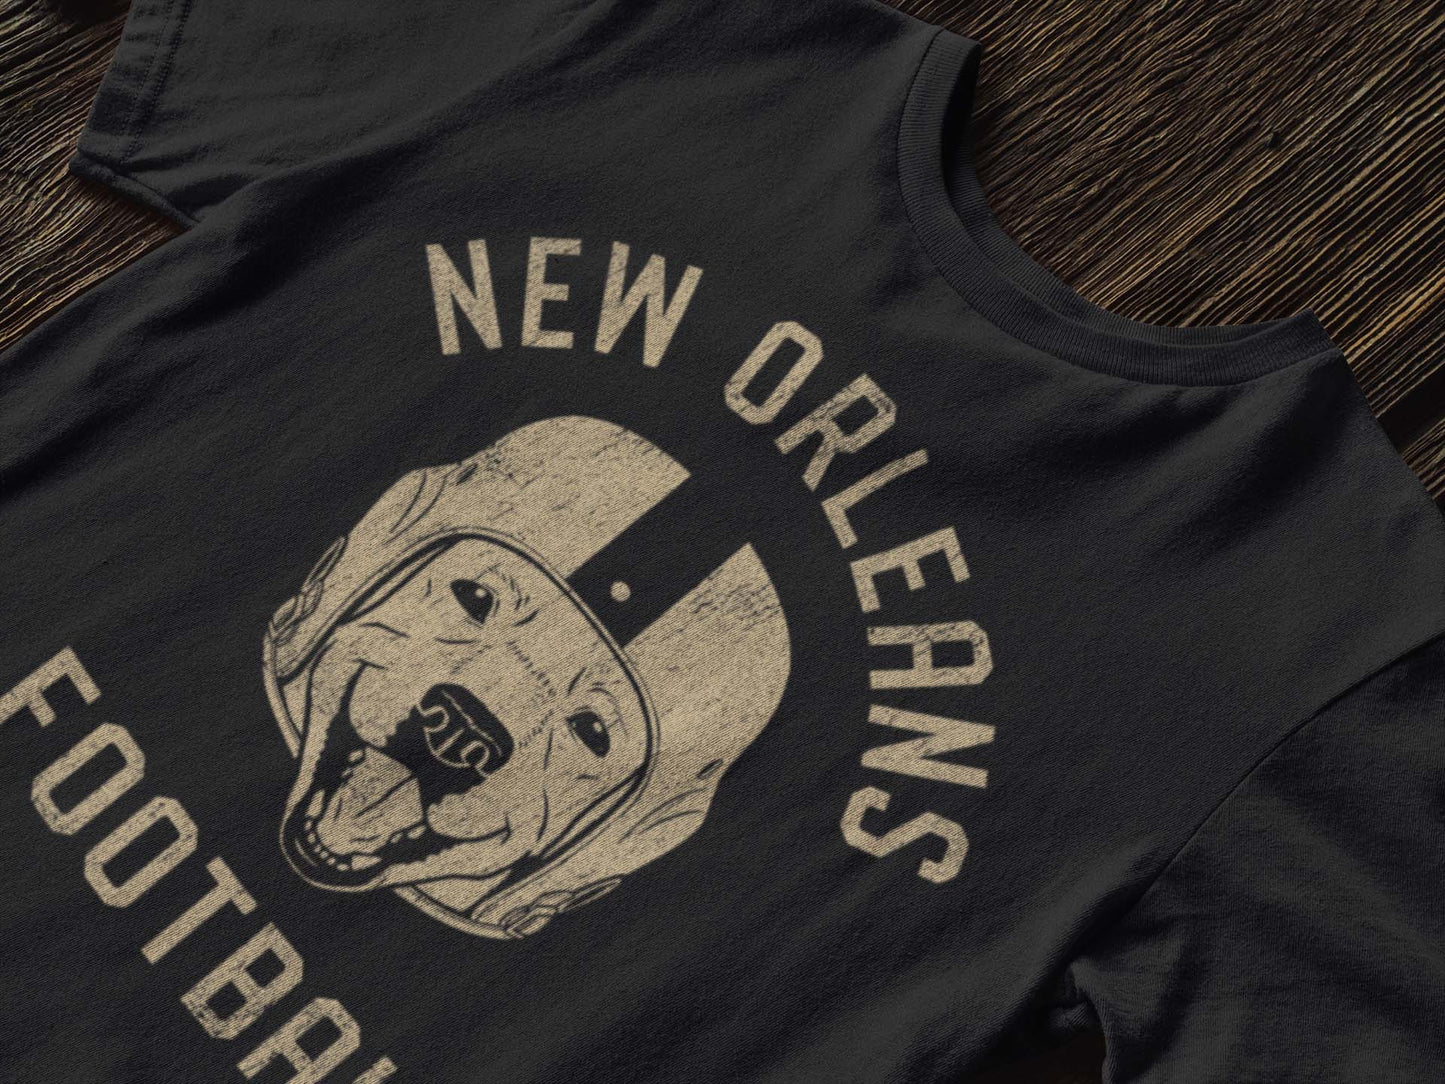 New Orleans Football Labrador T-Shirt